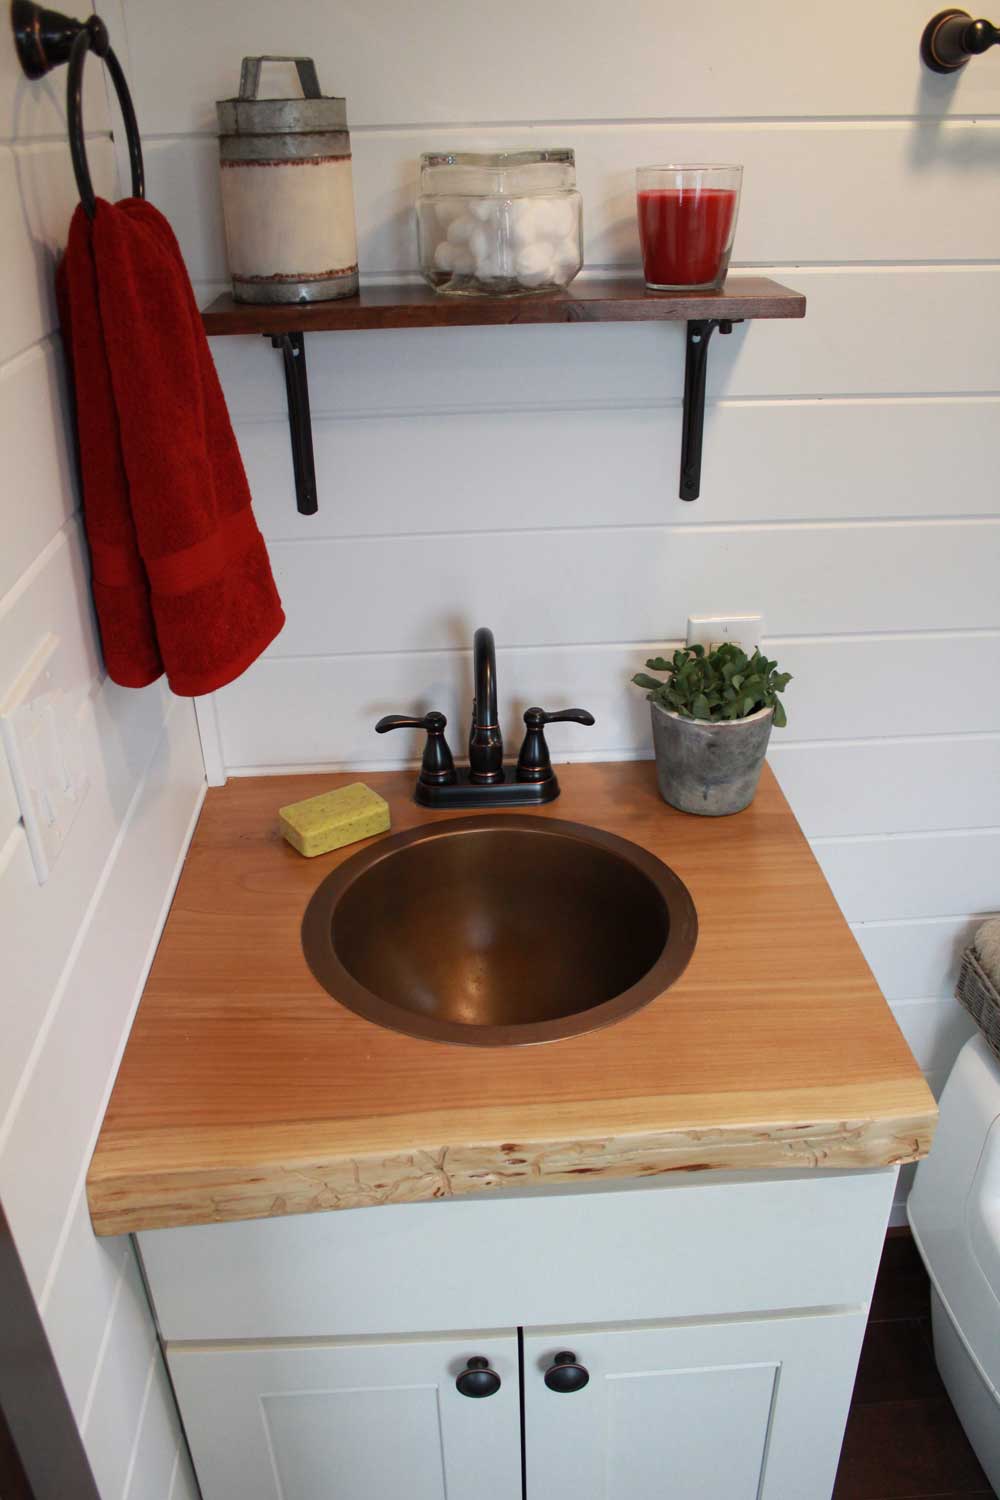 The Retro Southern Charm custom tiny house's bathroom sink